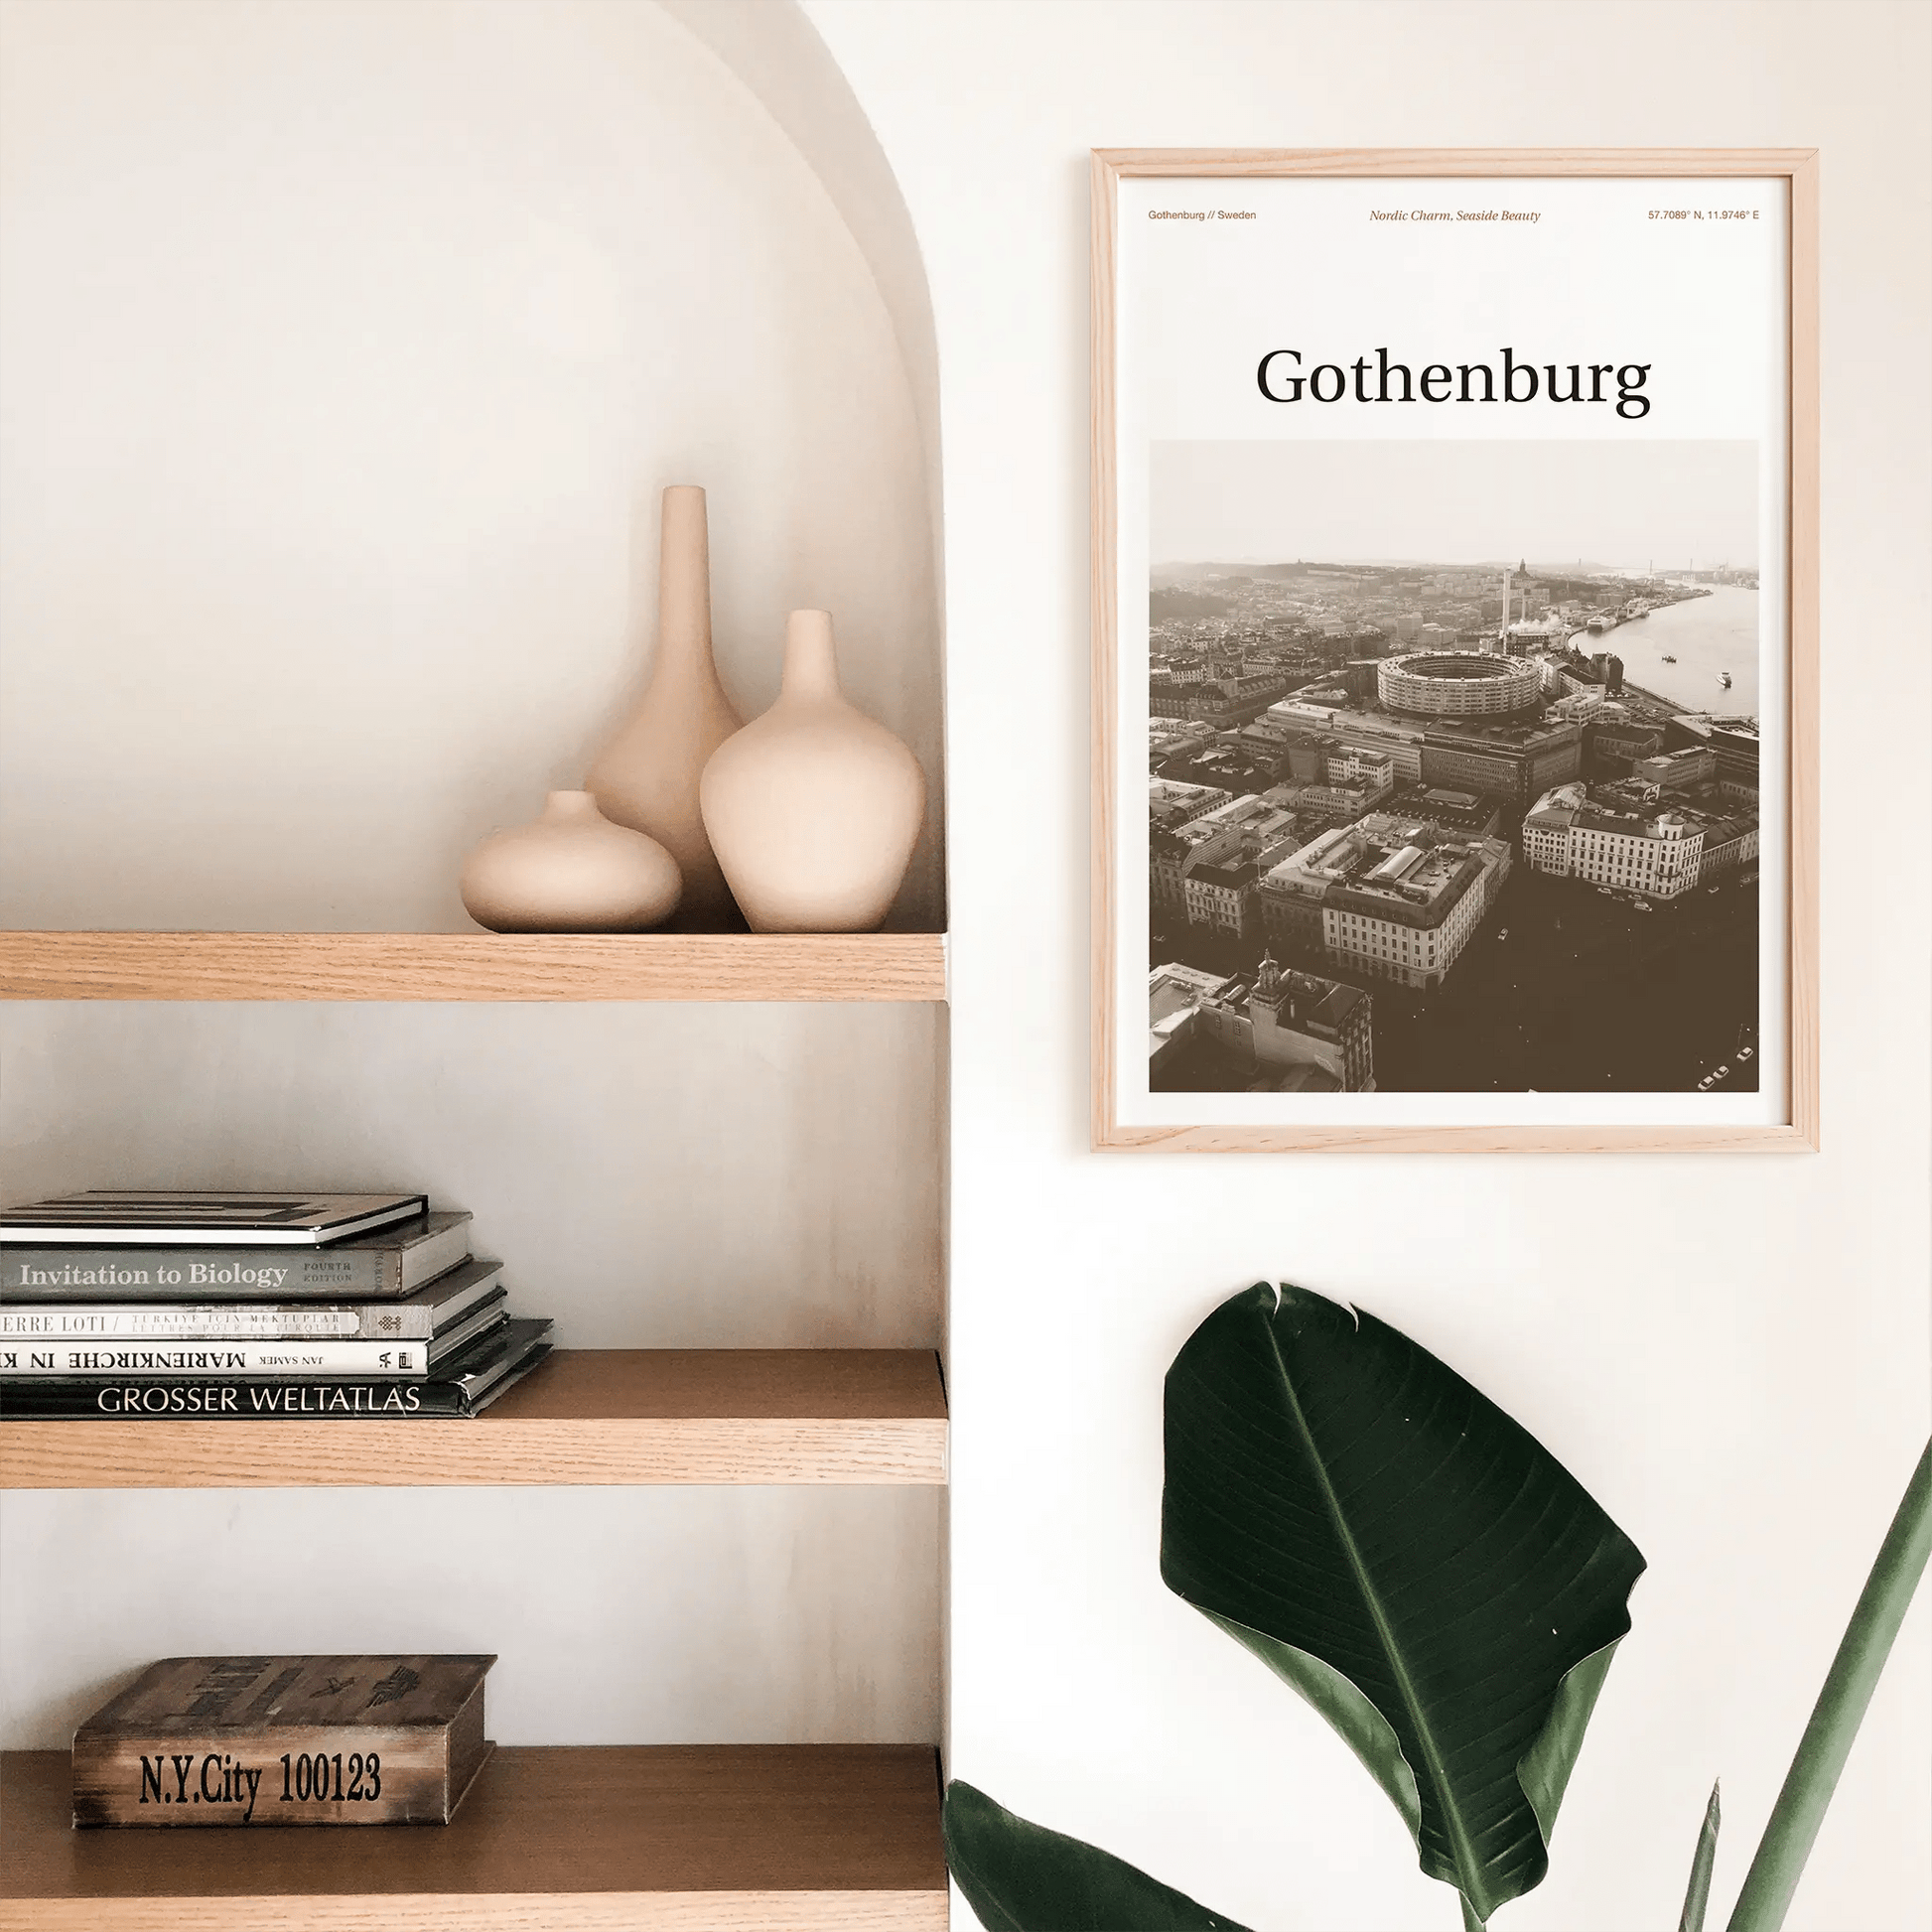 Gothenburg Essence Poster - The Globe Gallery